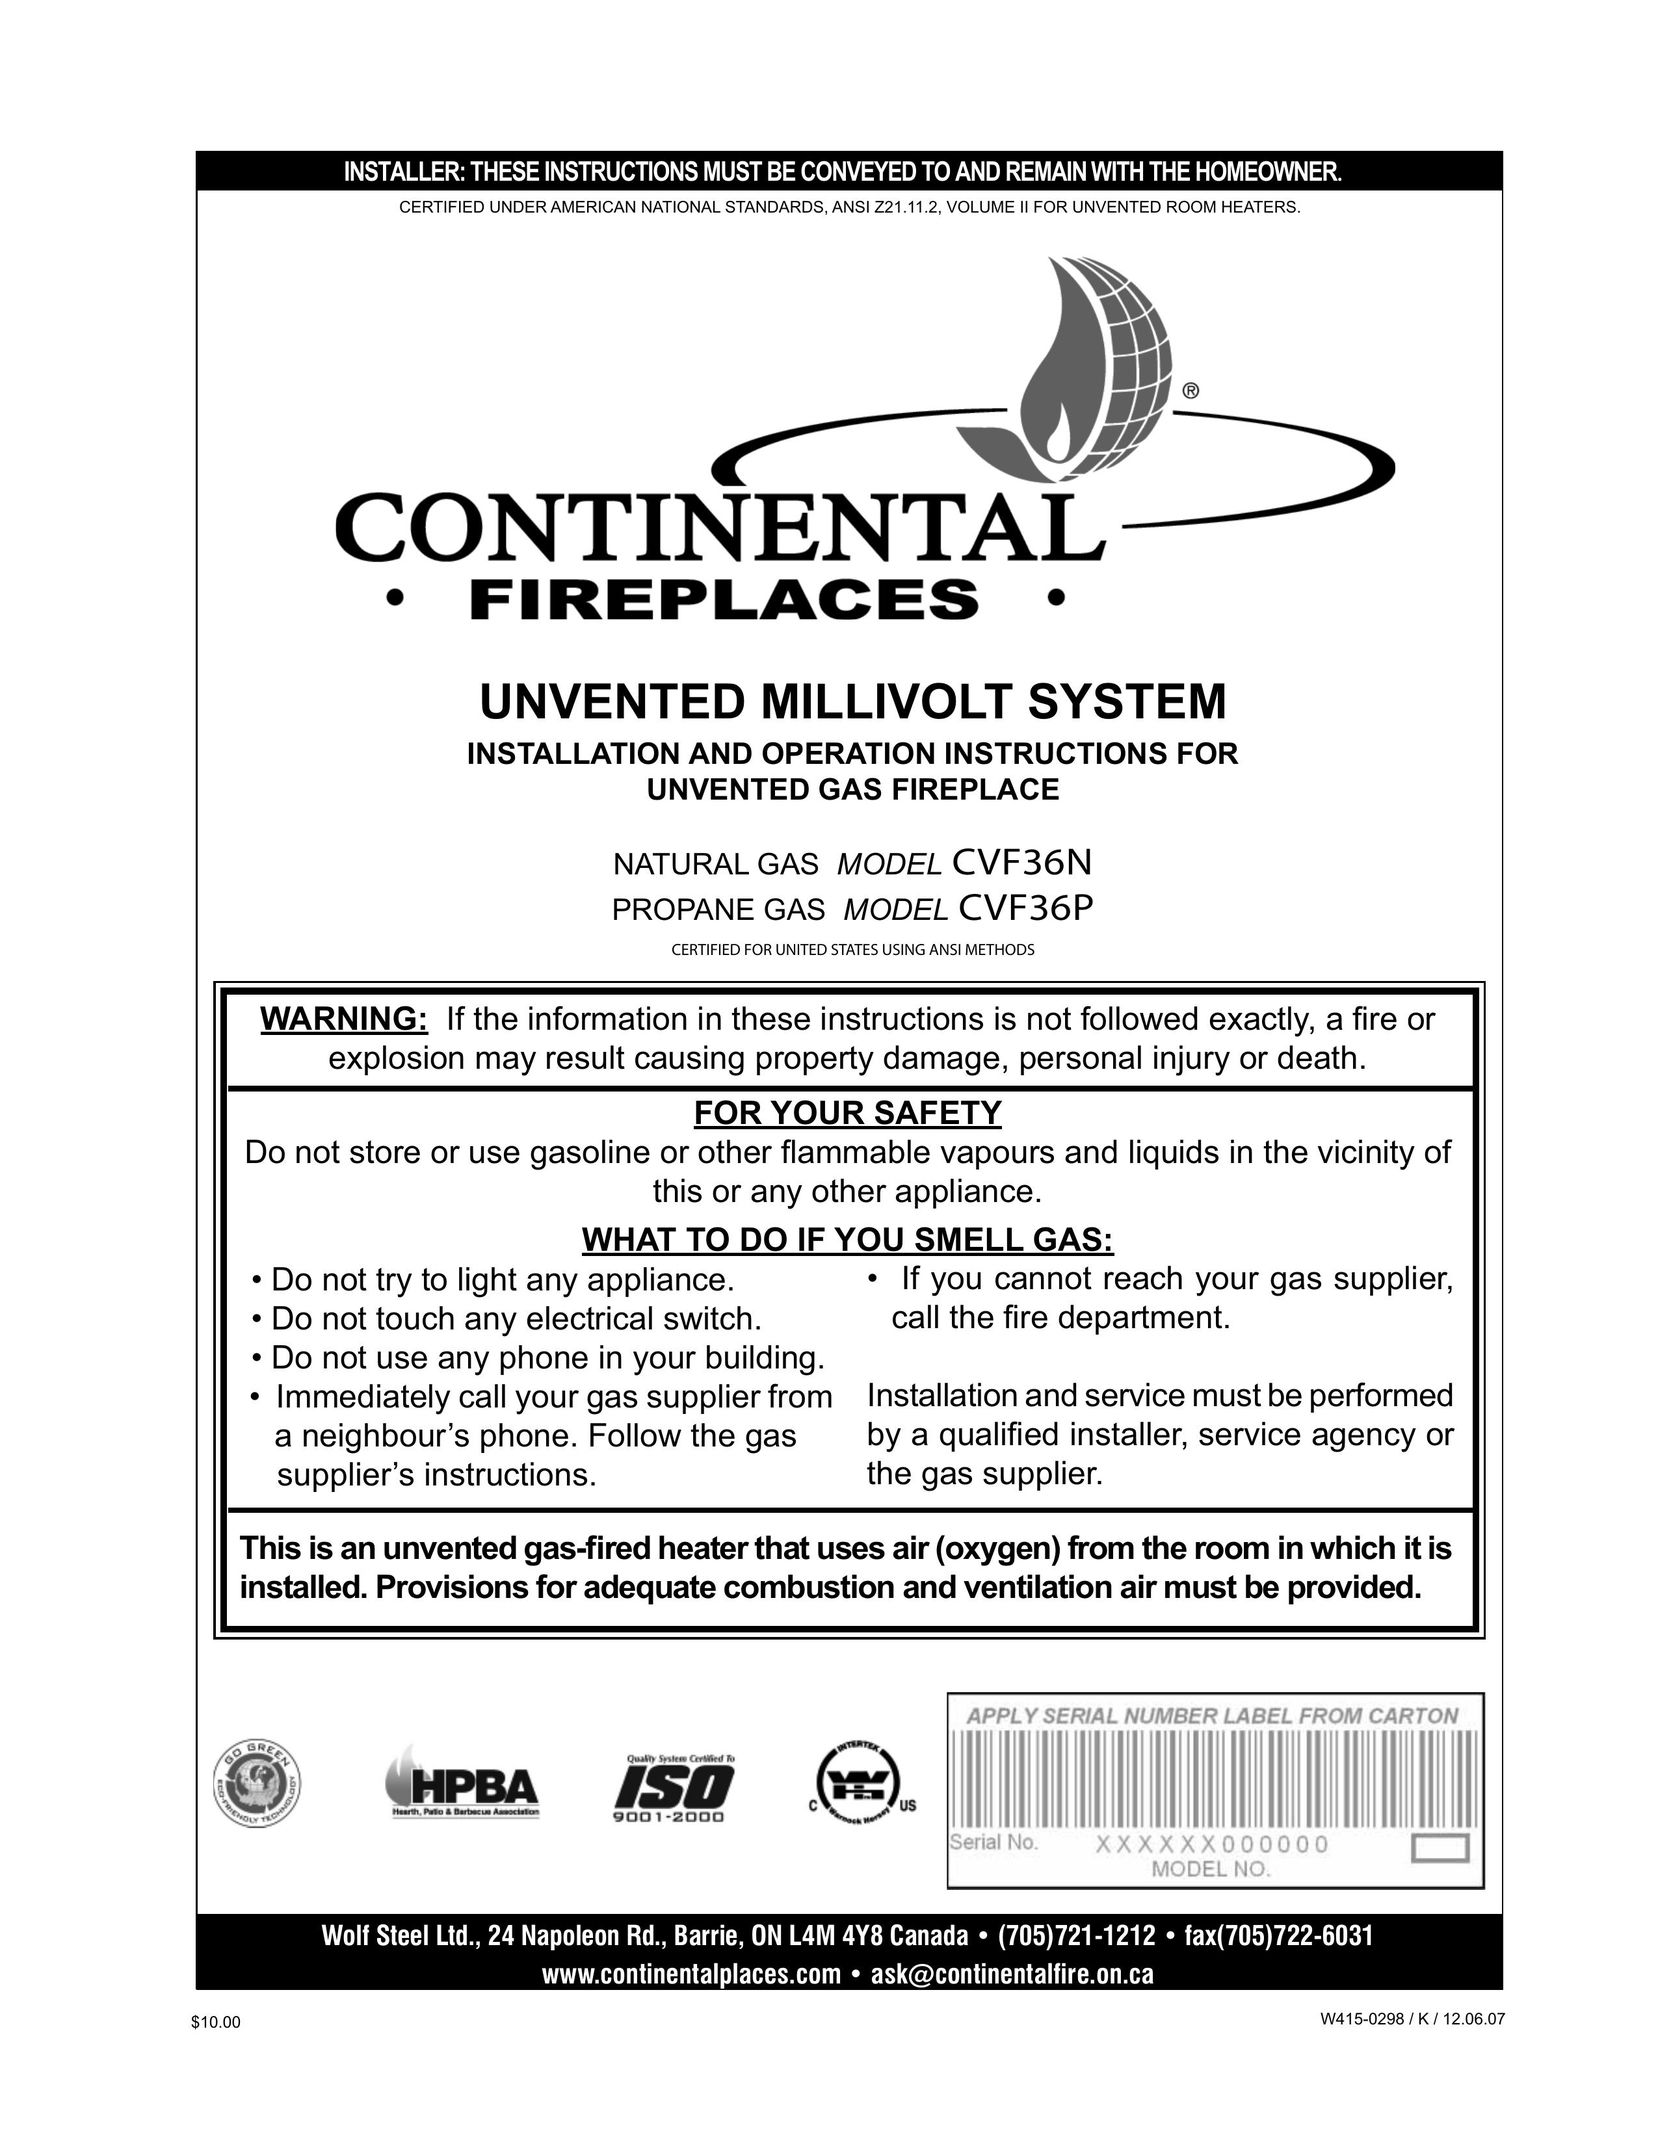 Continental CVF36P Indoor Fireplace User Manual